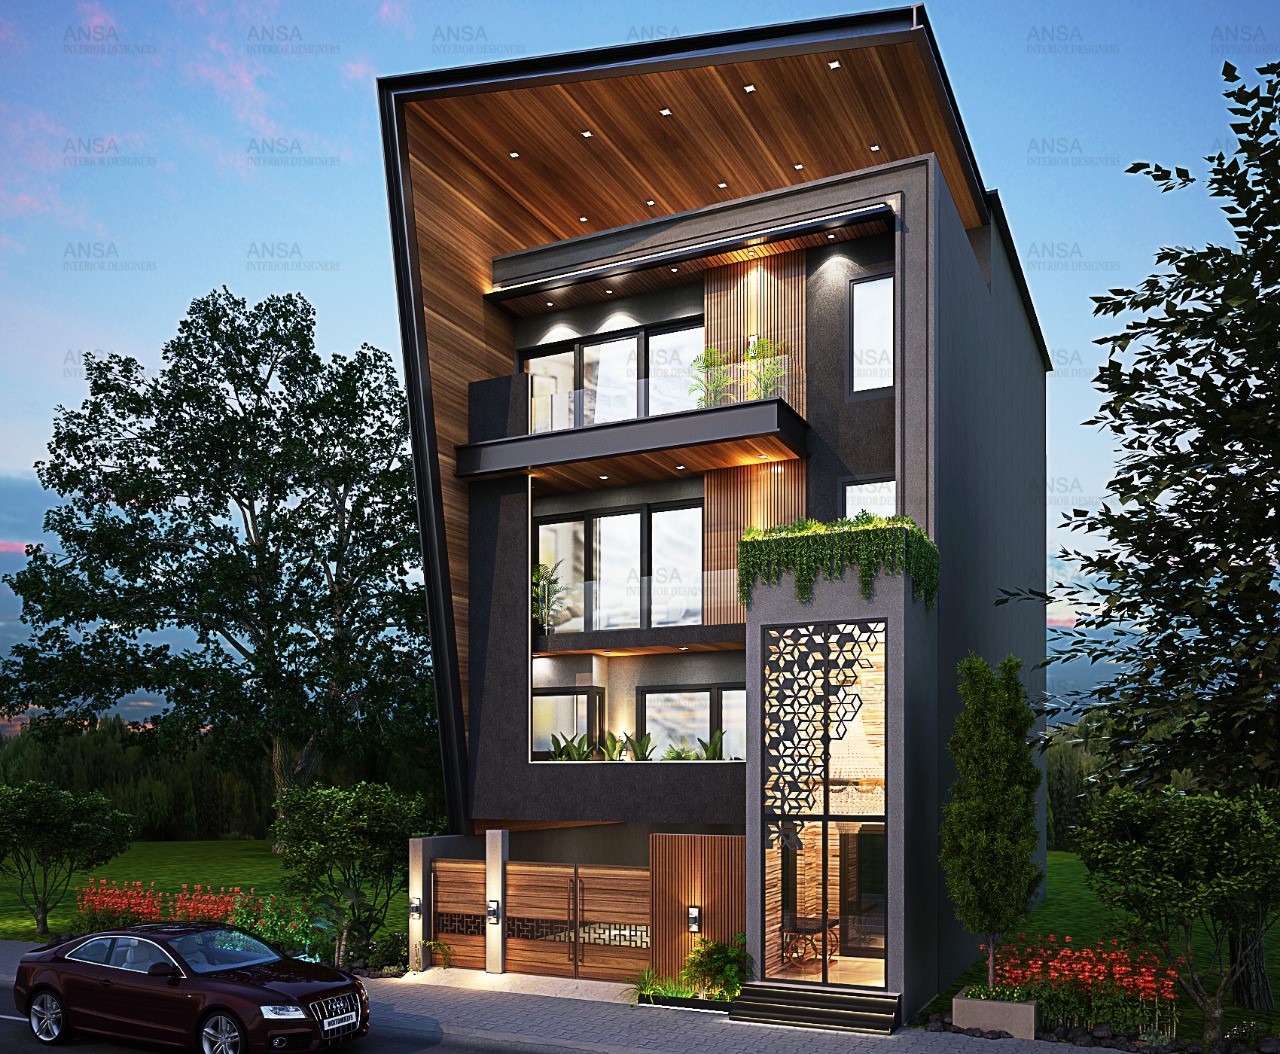 proposed facade in rohini by ansa